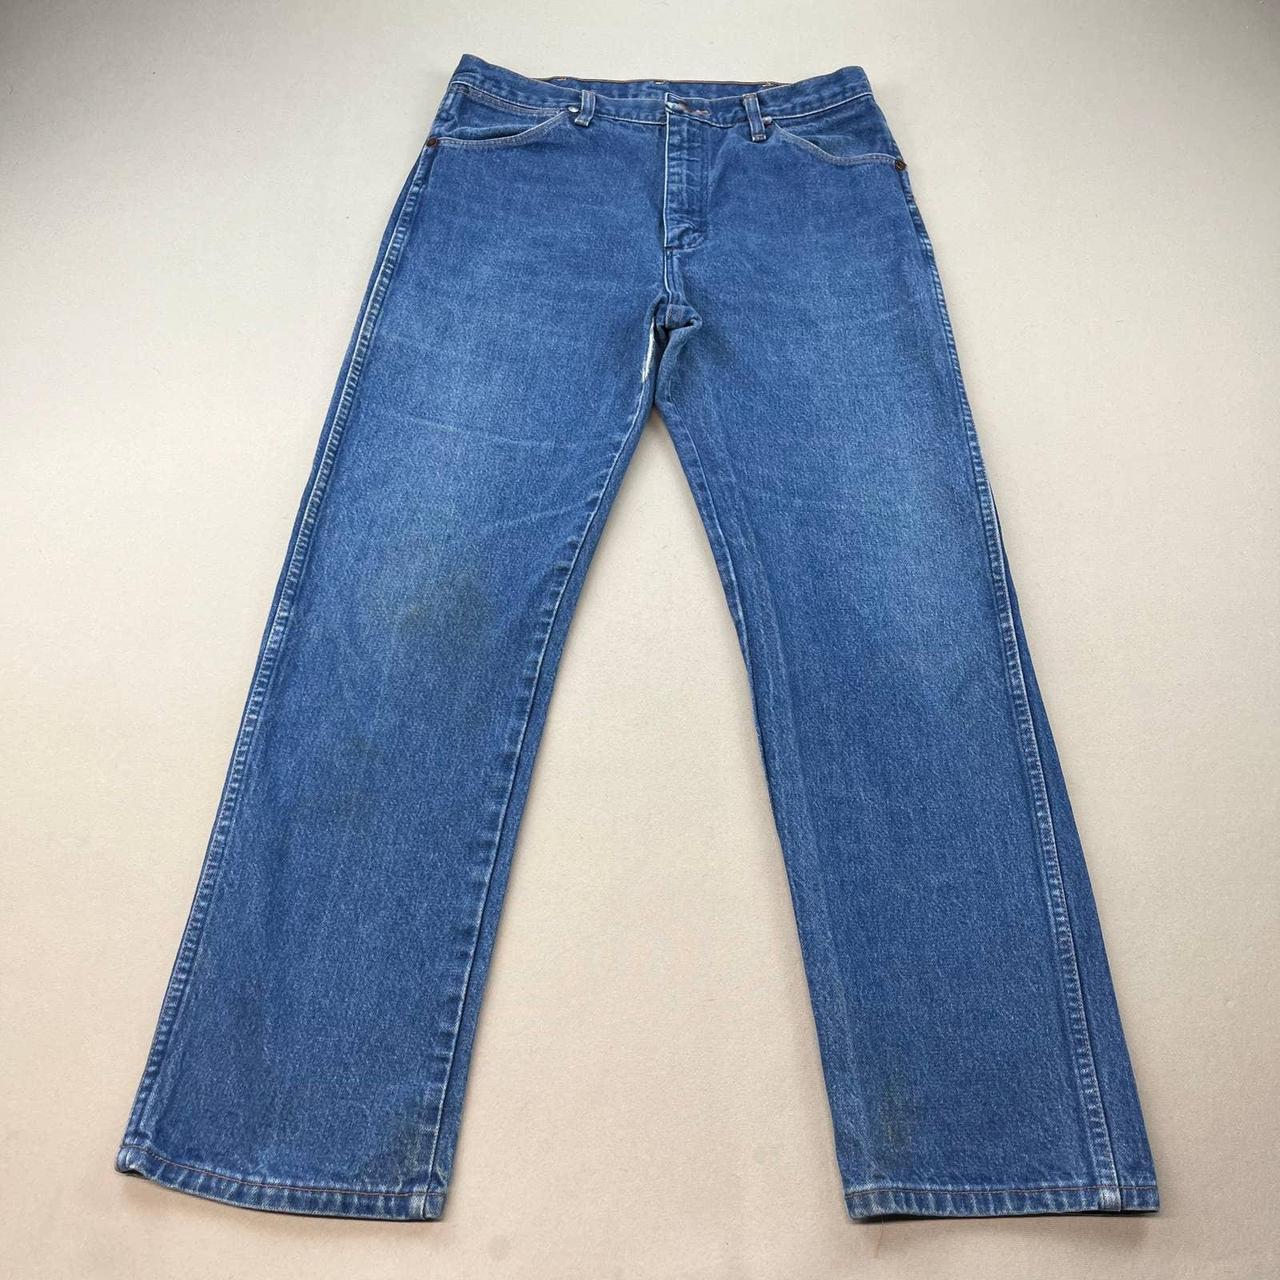 Vintage Wrangler Cowboy Cut Jeans Mens 34x30 Blue... - Depop